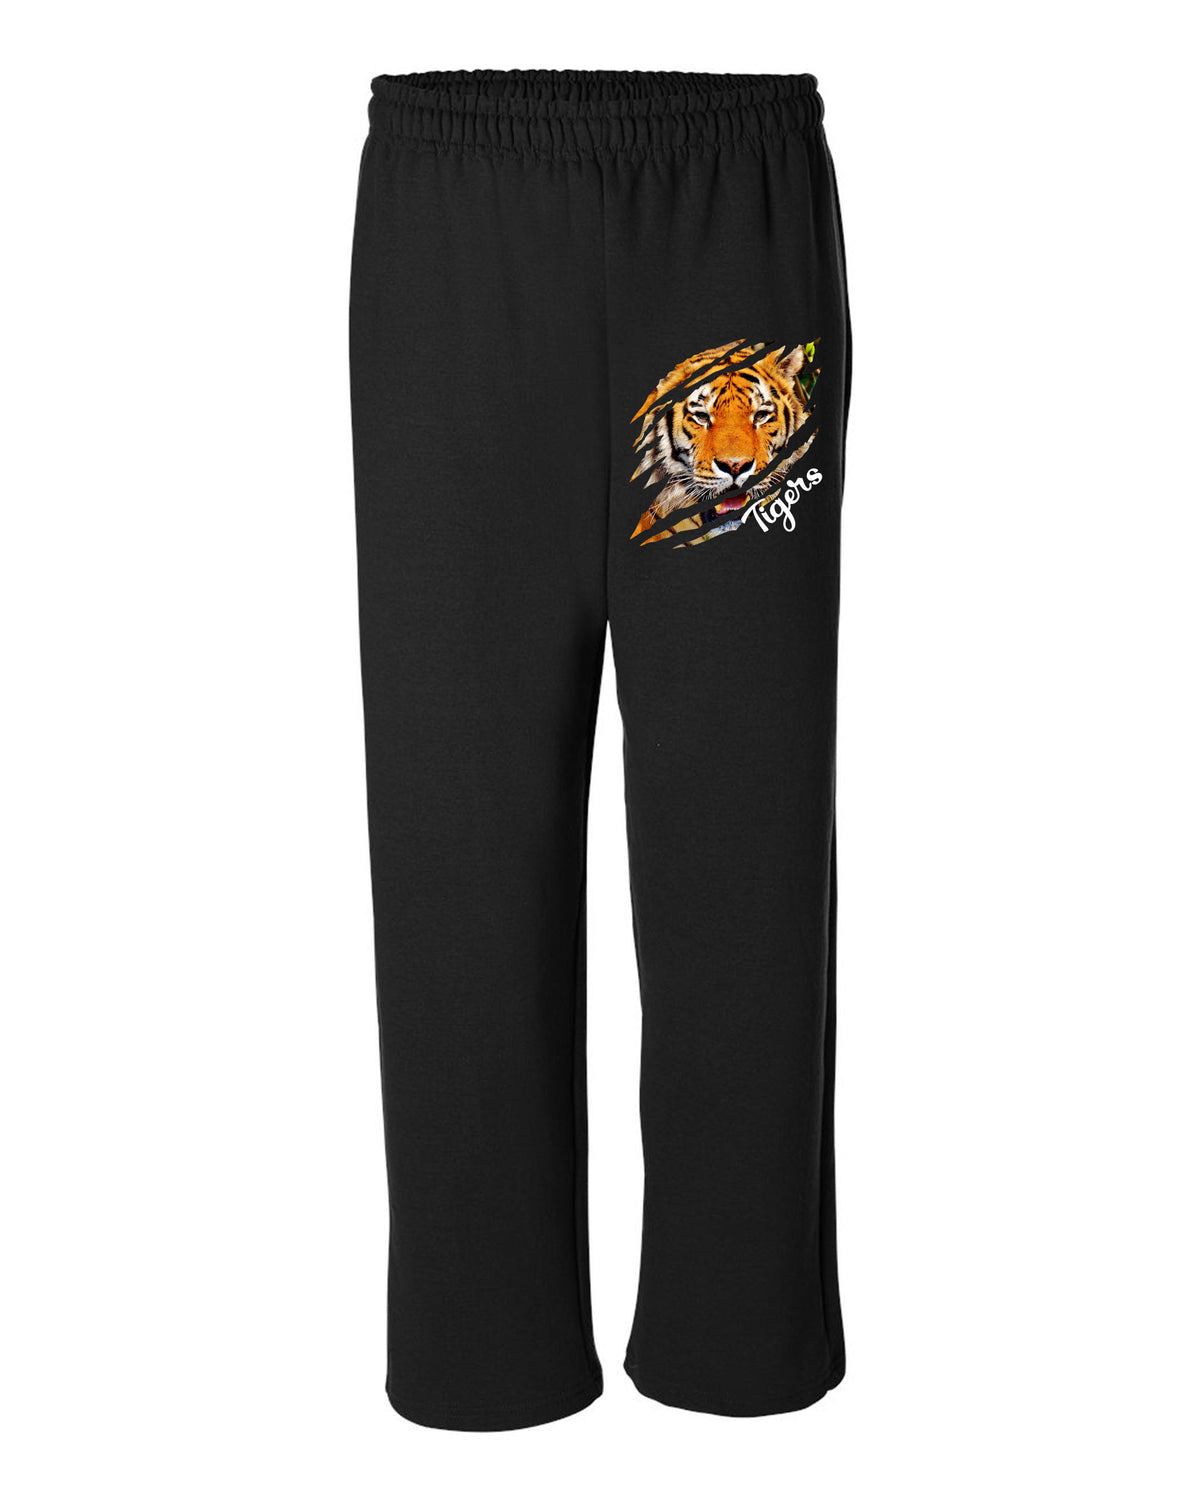 Lafayette Tigers Design 10 Open Bottom Sweatpants